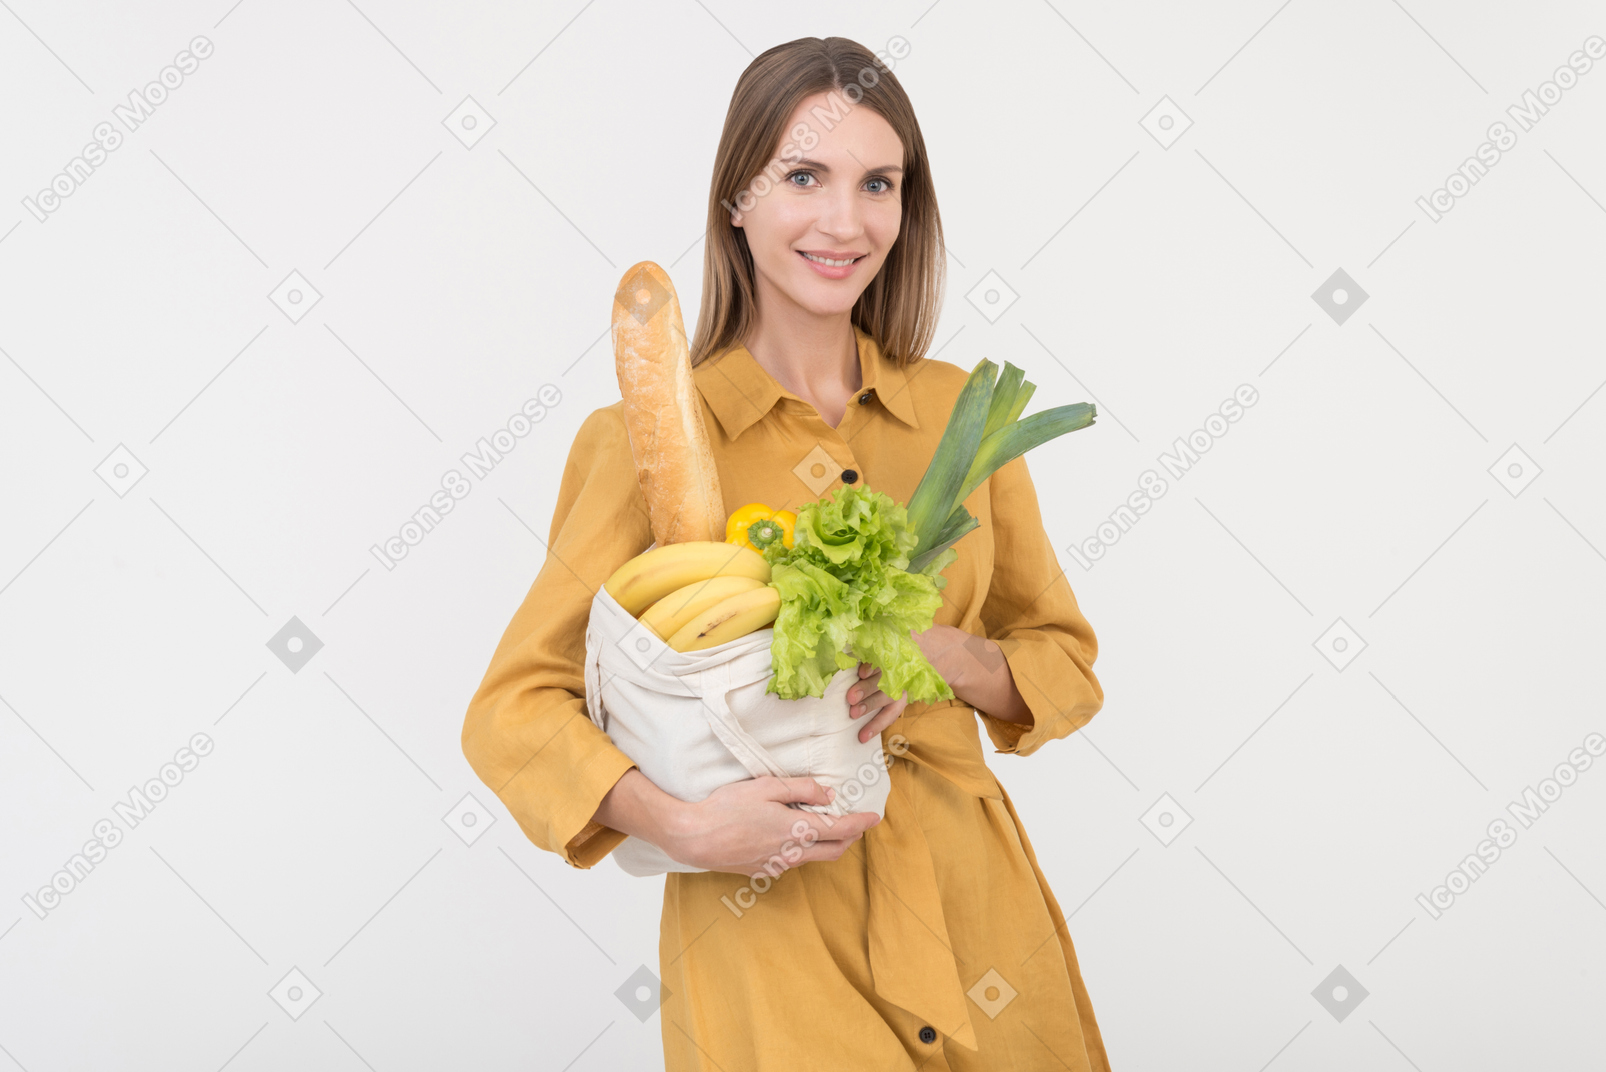 Mujer joven con bolsa de compras reusabel con verduras